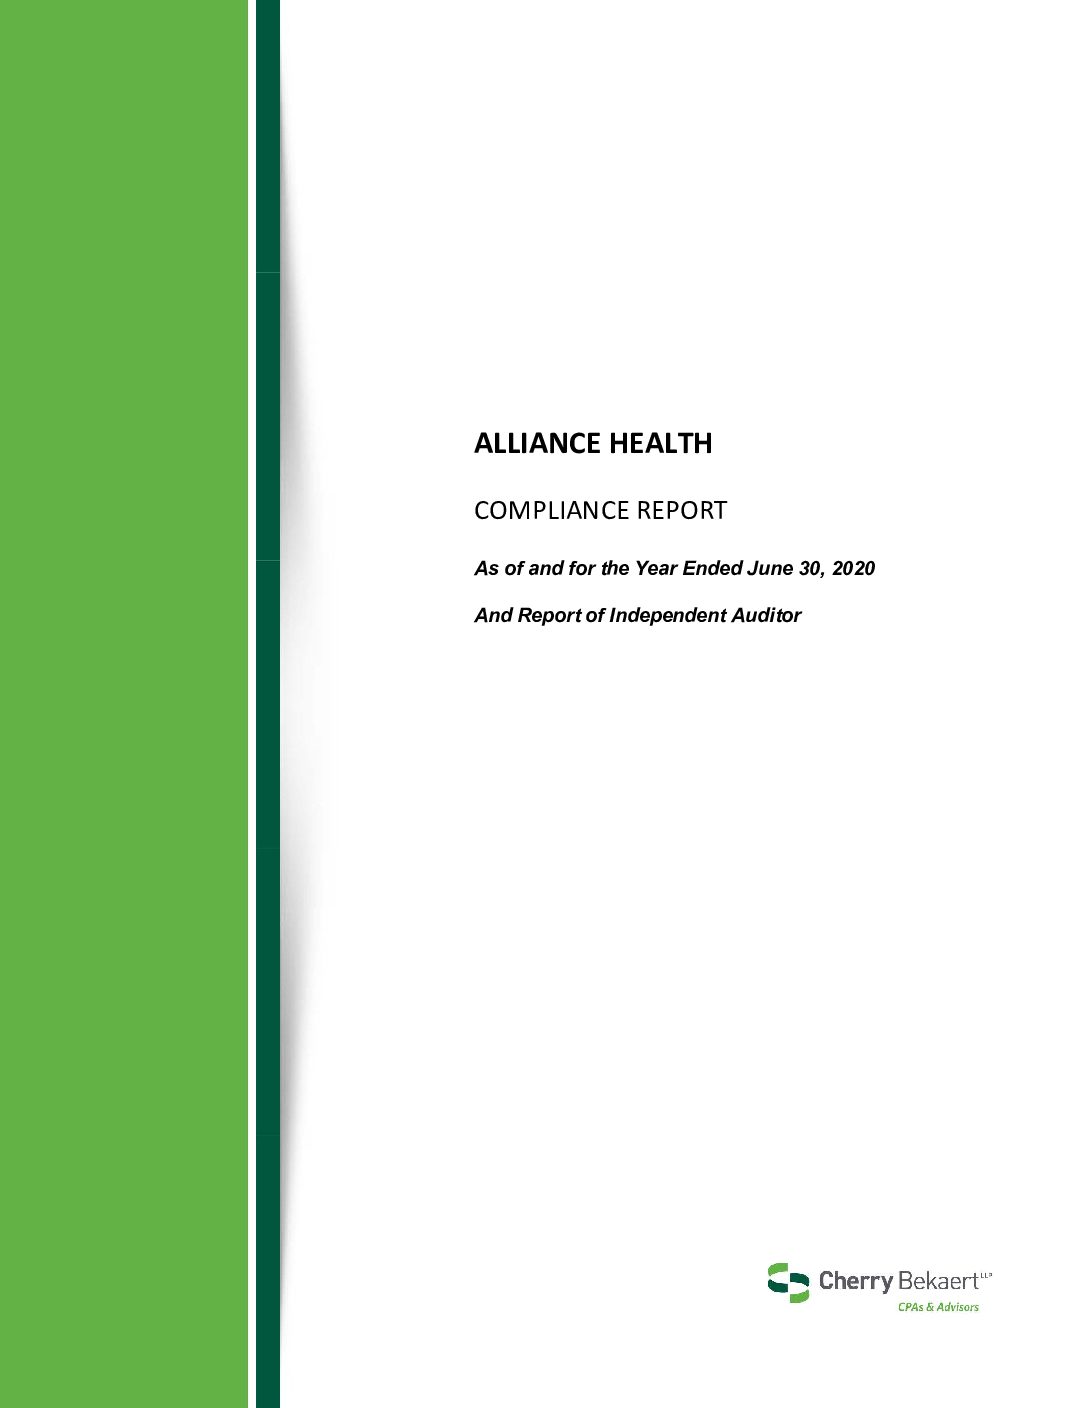 Alliance Health Compliance Report